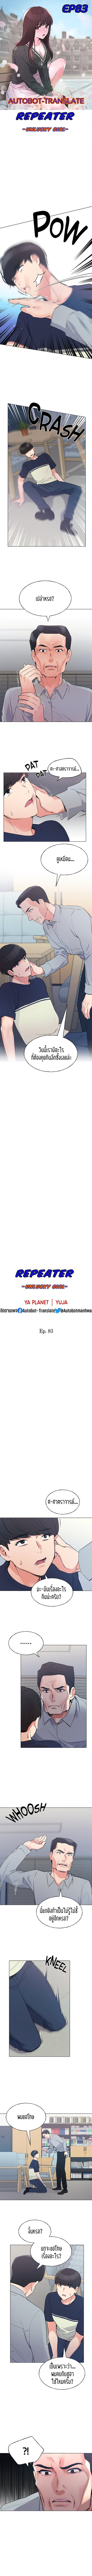 Repeater 83 (1)